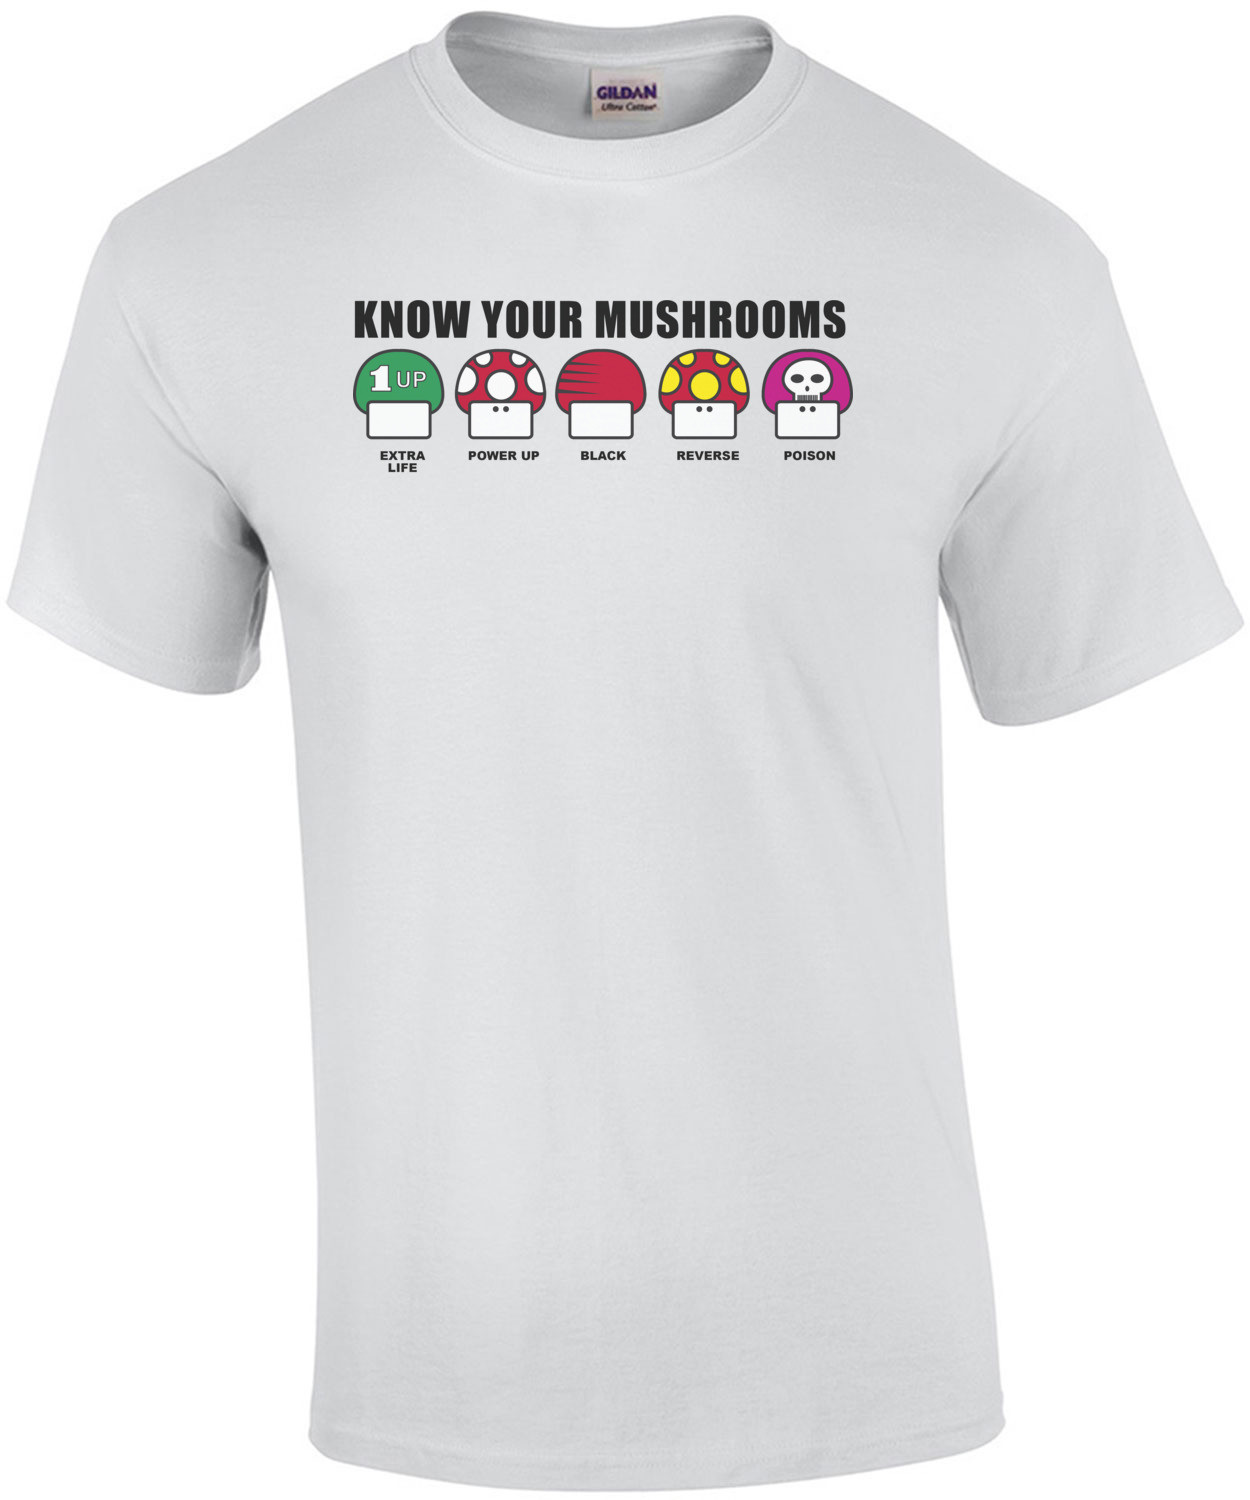 Know Your Mushrooms - Nintendo T-Shirt